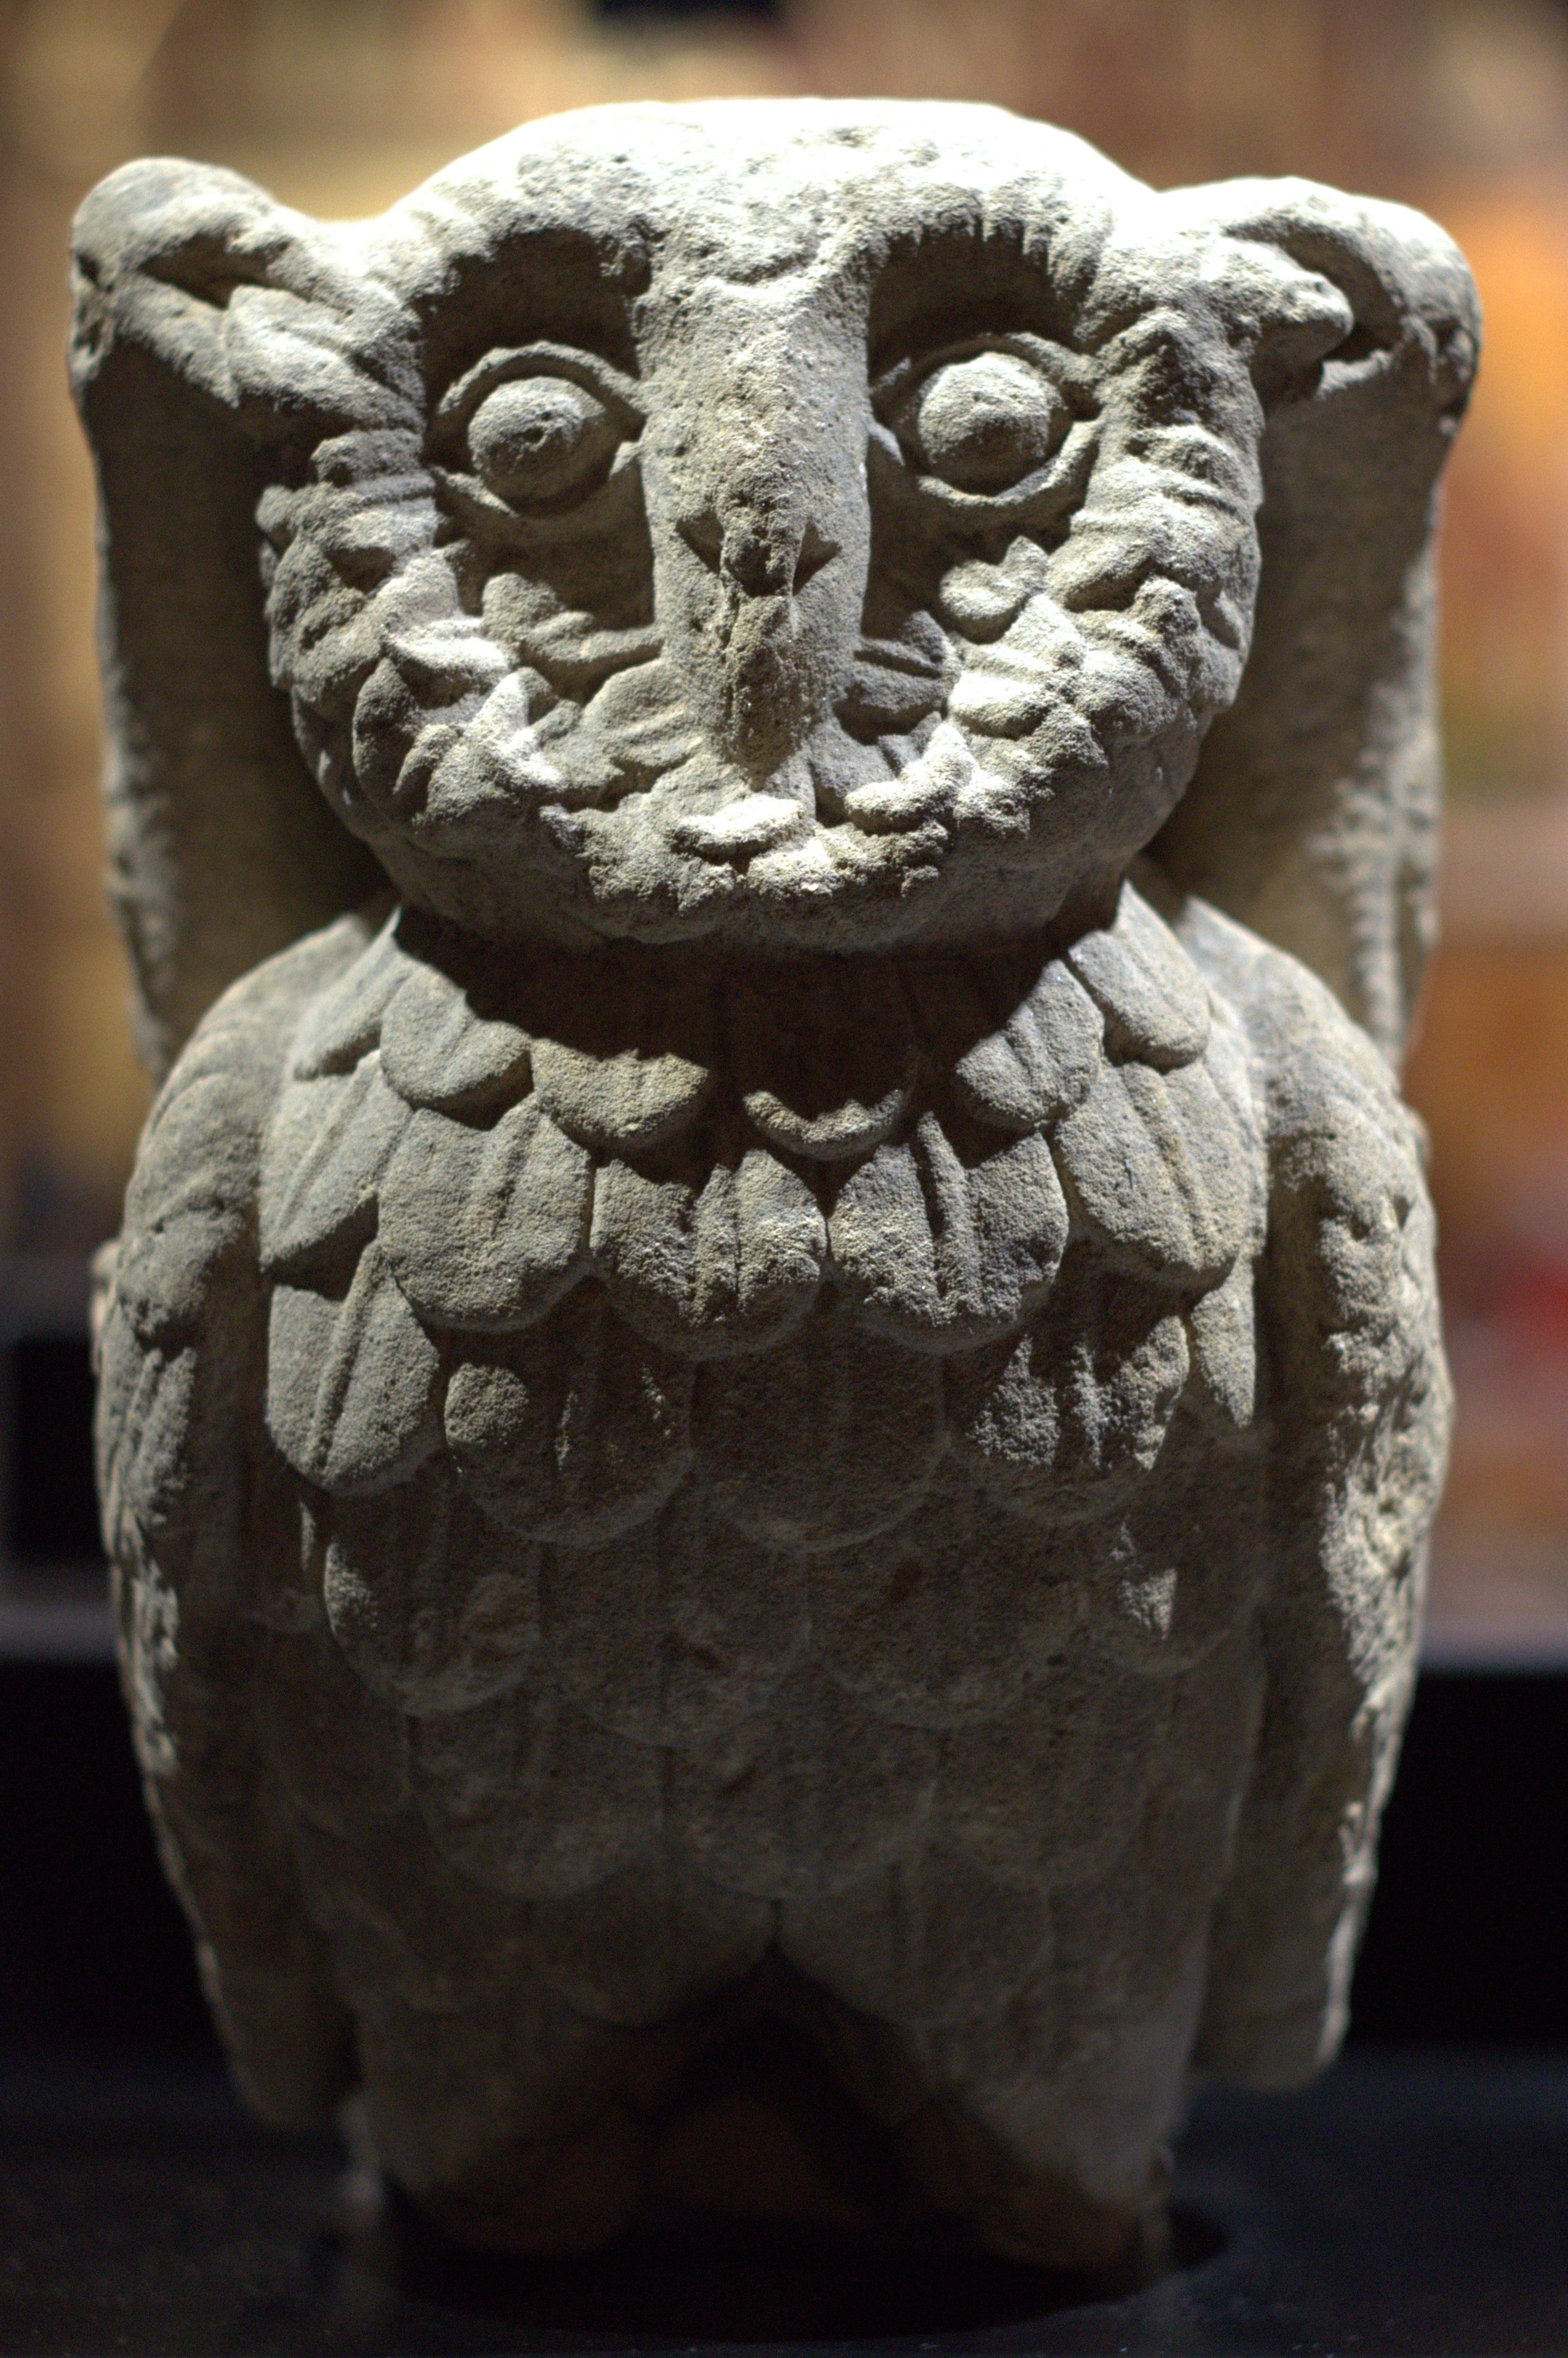 gray concrete owl figurine